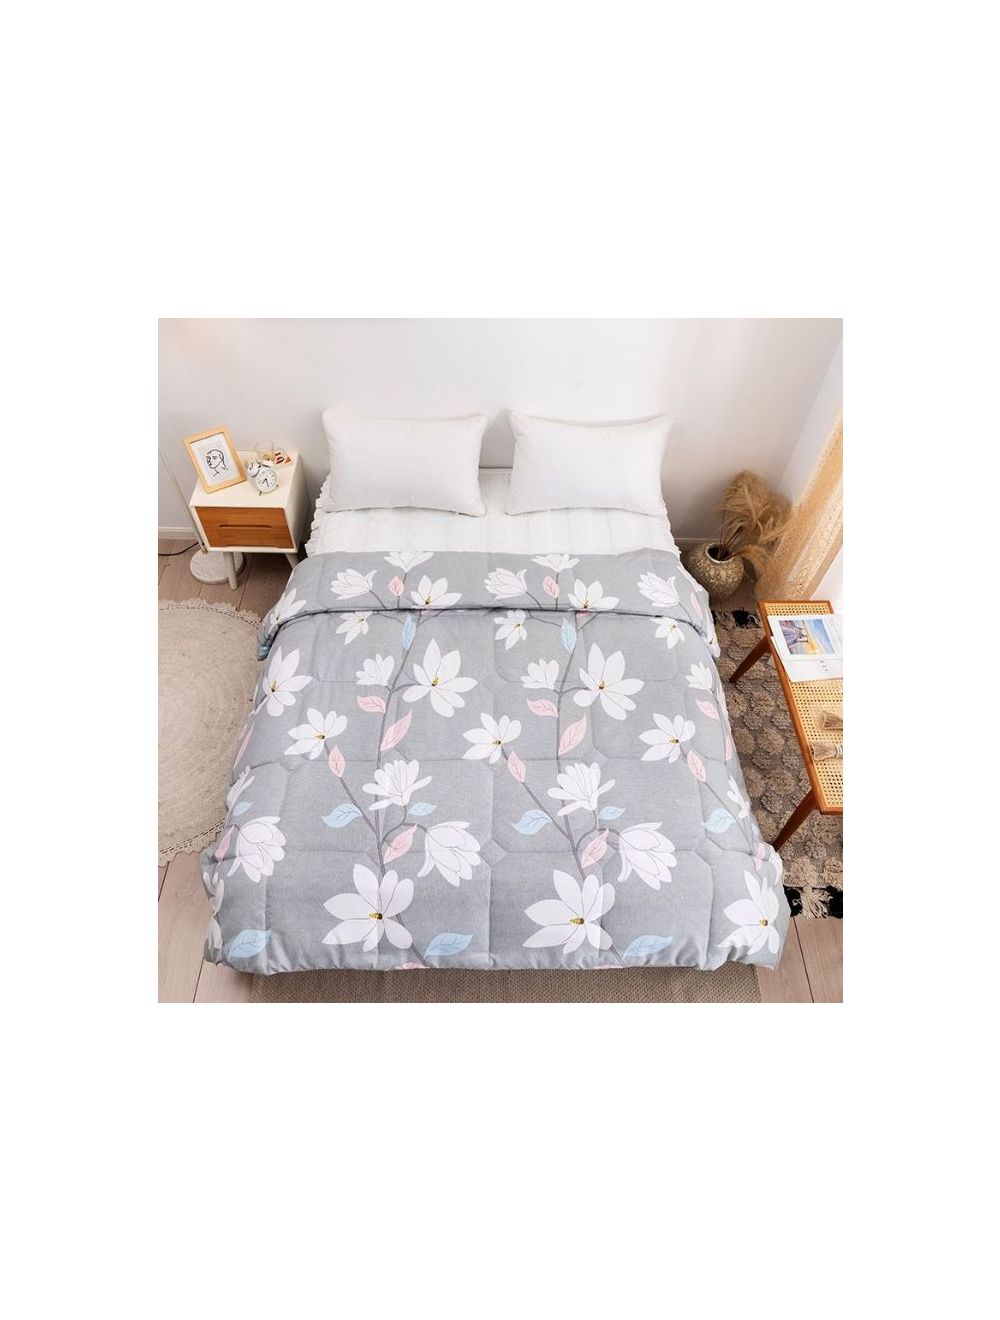 Rishahome  King Size Comforter Microfiber Multicolour 220x240cm-SSAC0003